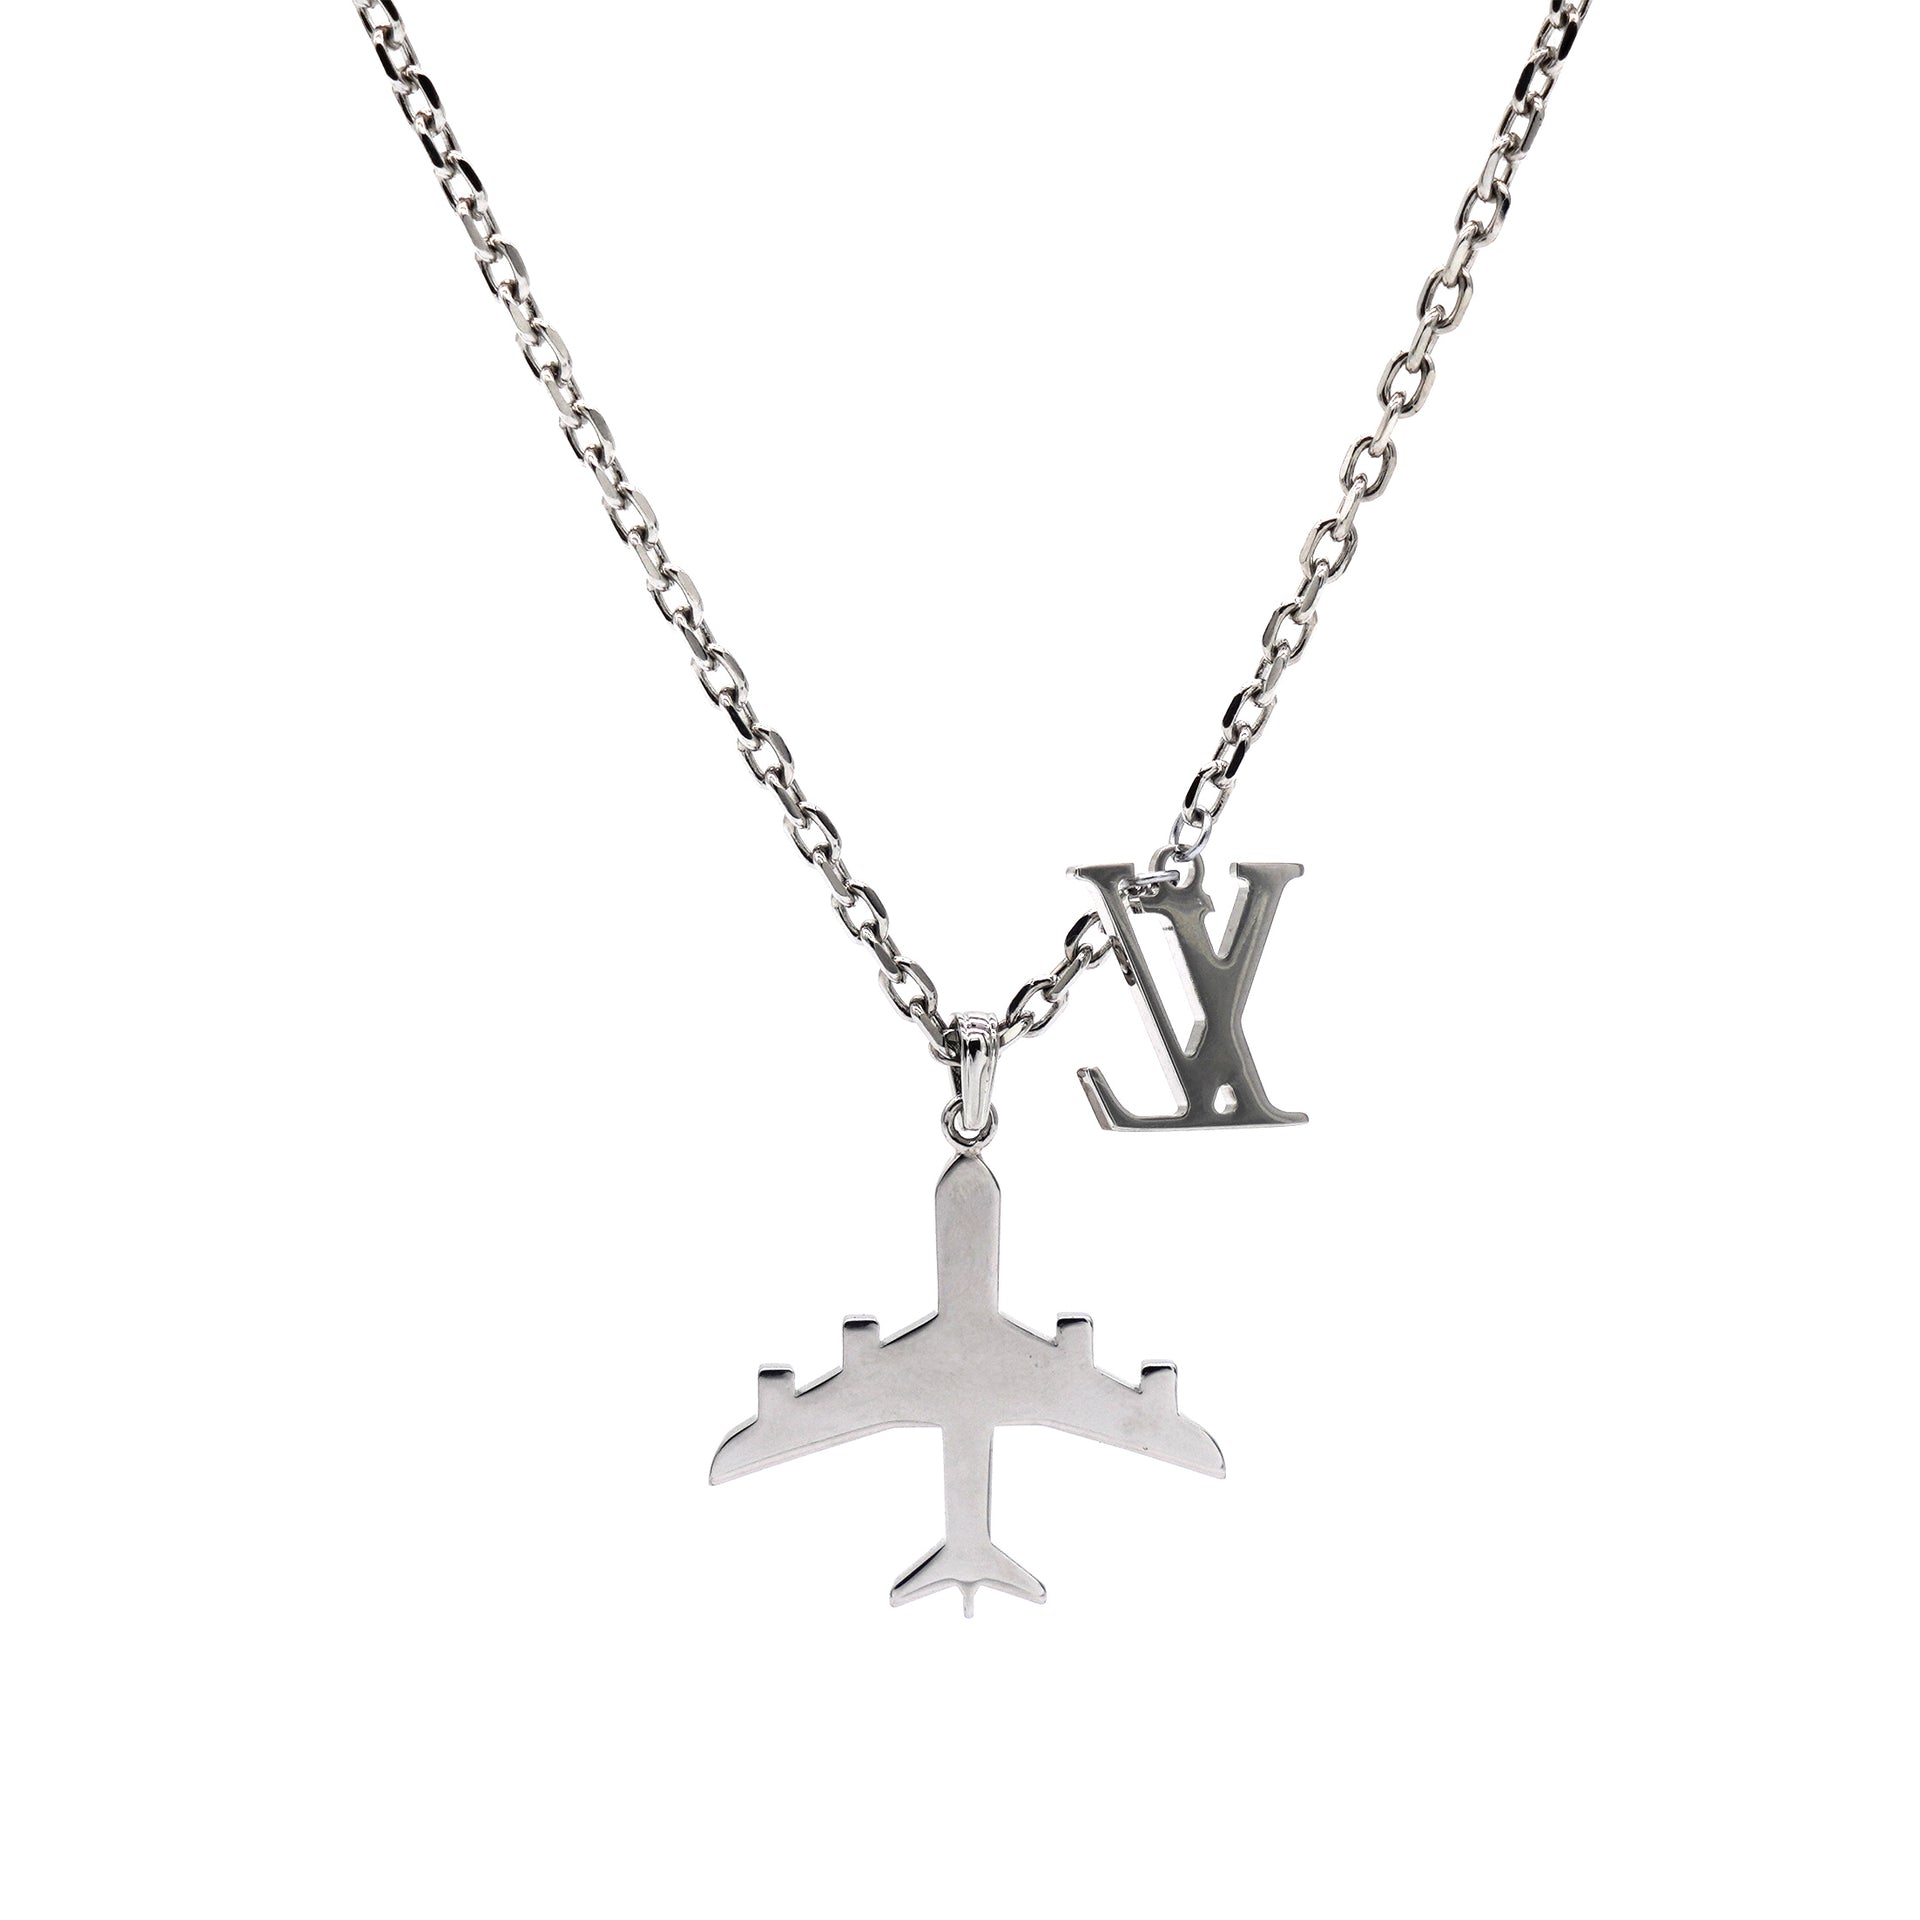 LV Plane Necklace